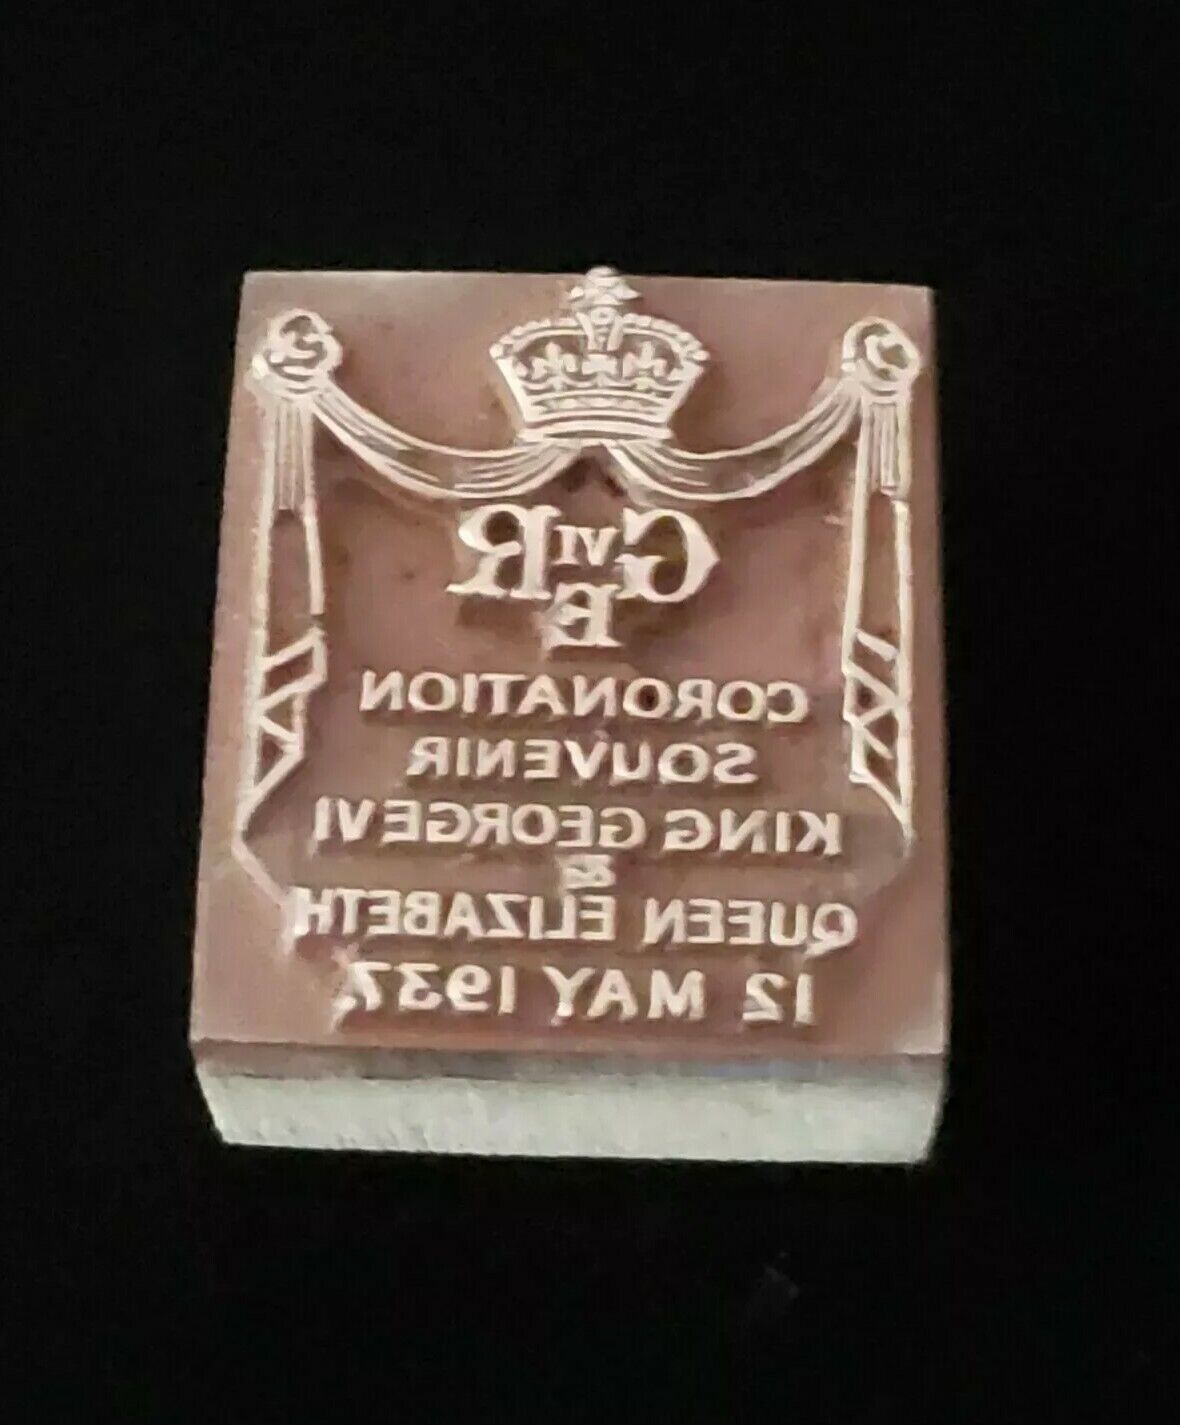 Rare Antique 1937 Queen Elizabeth II King George VI Coronation Desk Stamp Seal 